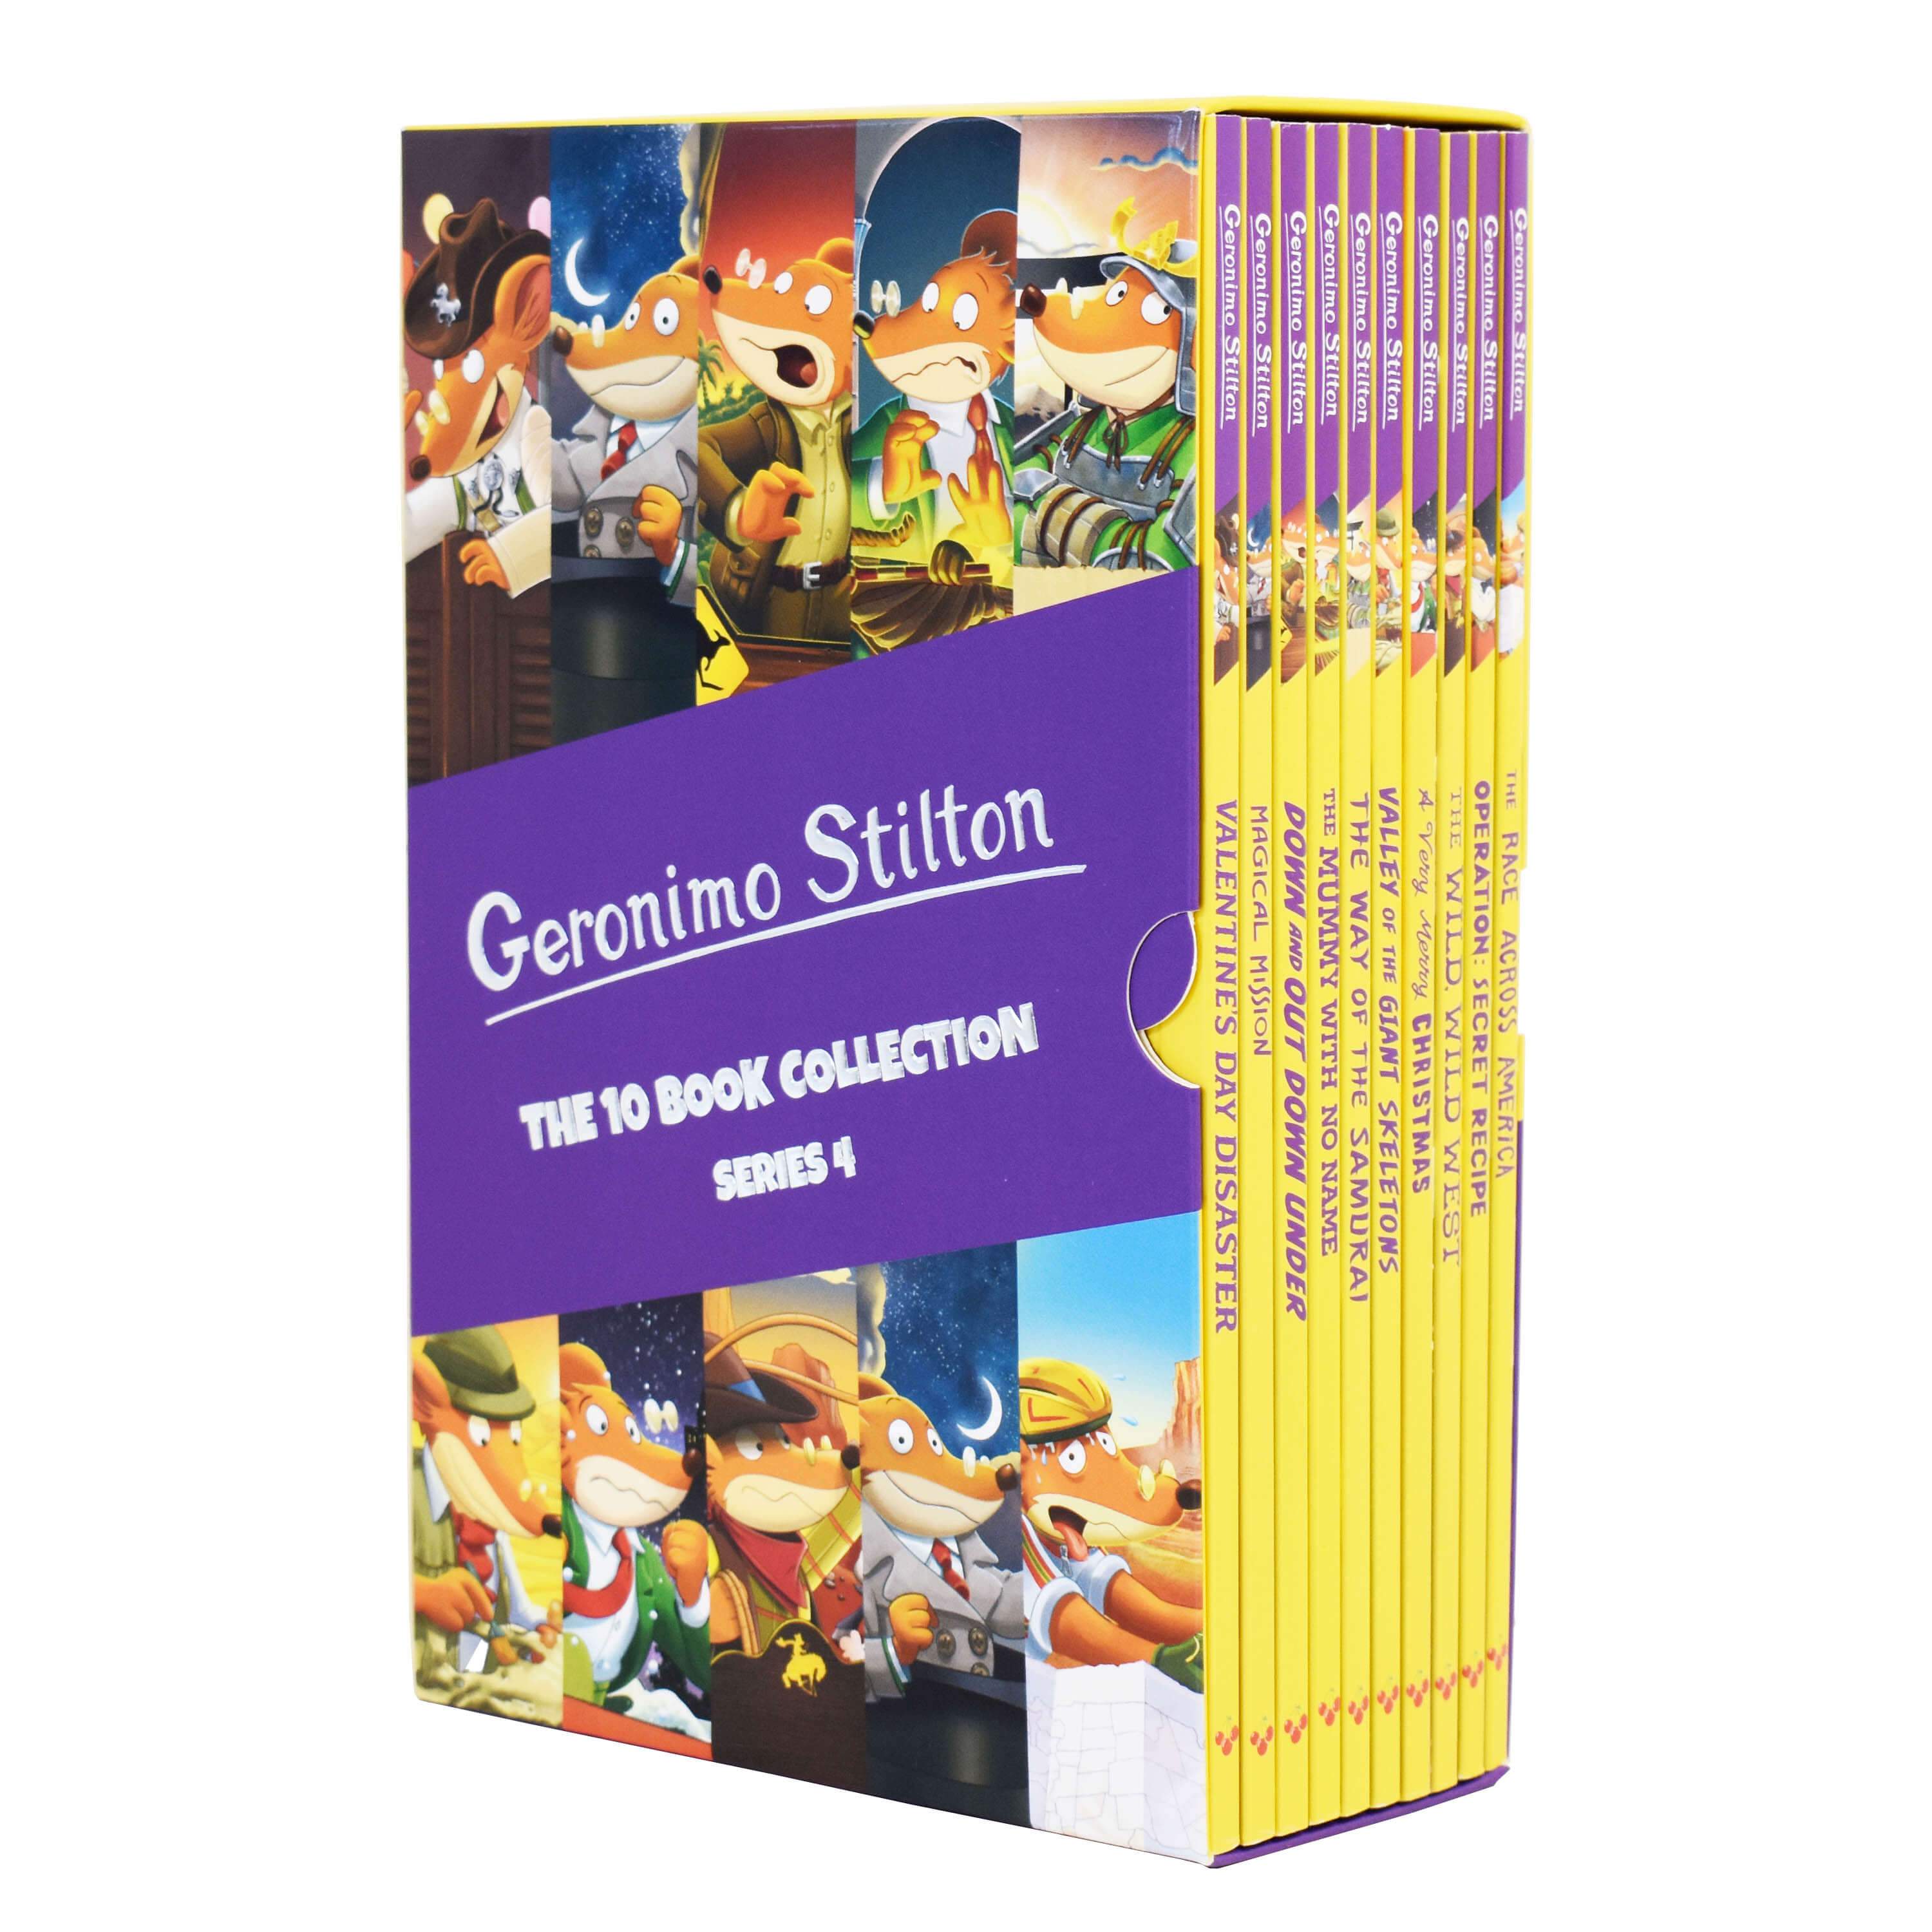 Age 7-9 - Geronimo Stilton 10 Books Collection (Series 4) Boxset - Ages 7-9 - Paperback